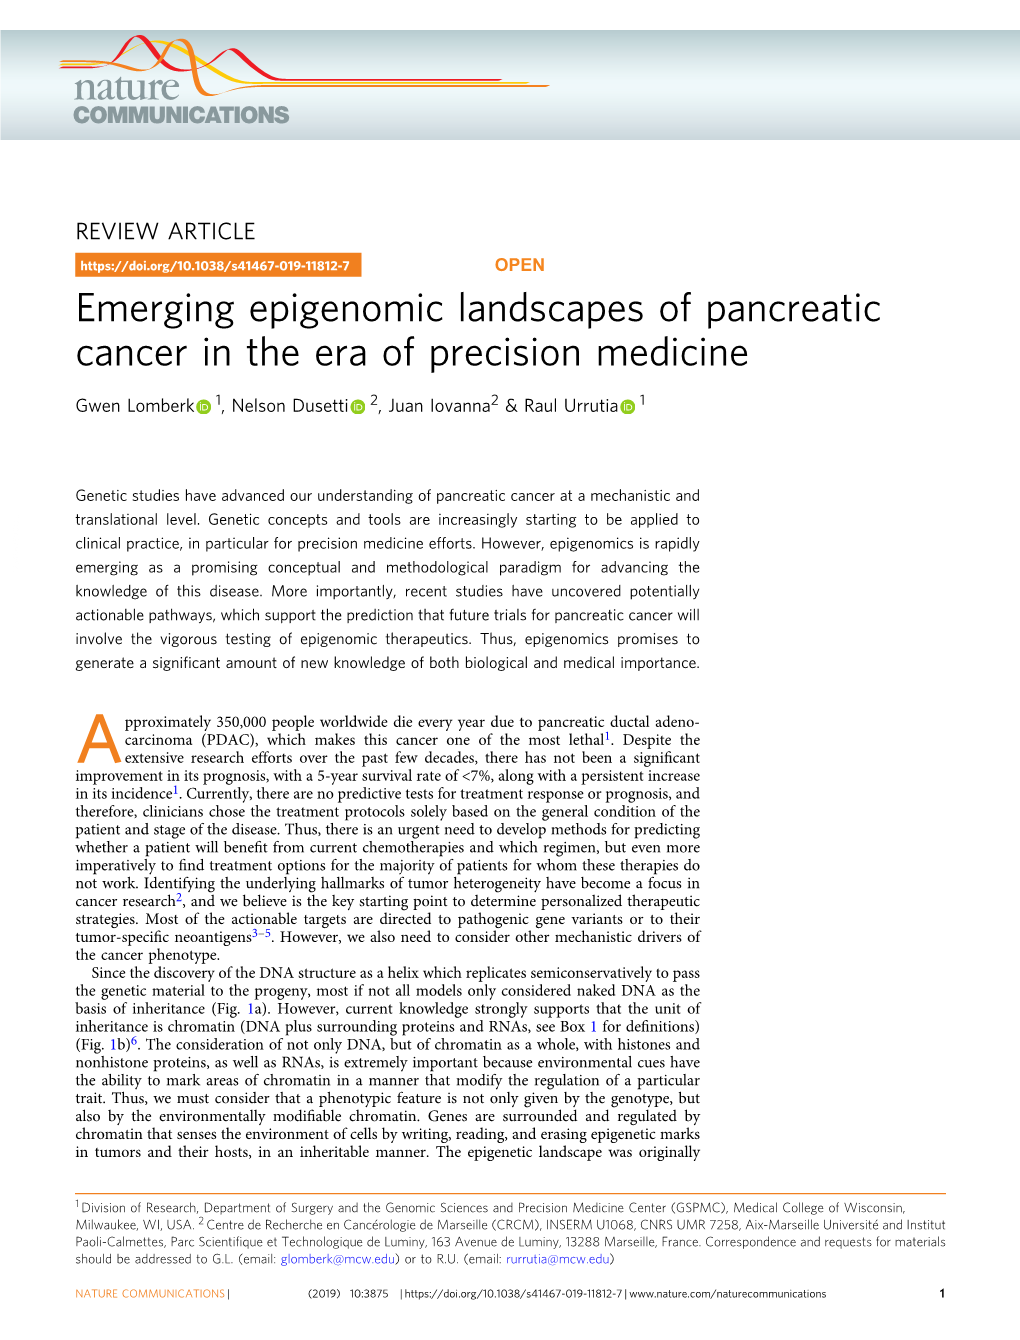 Emerging Epigenomic Landscapes of Pancreatic Cancer in the Era of Precision Medicine